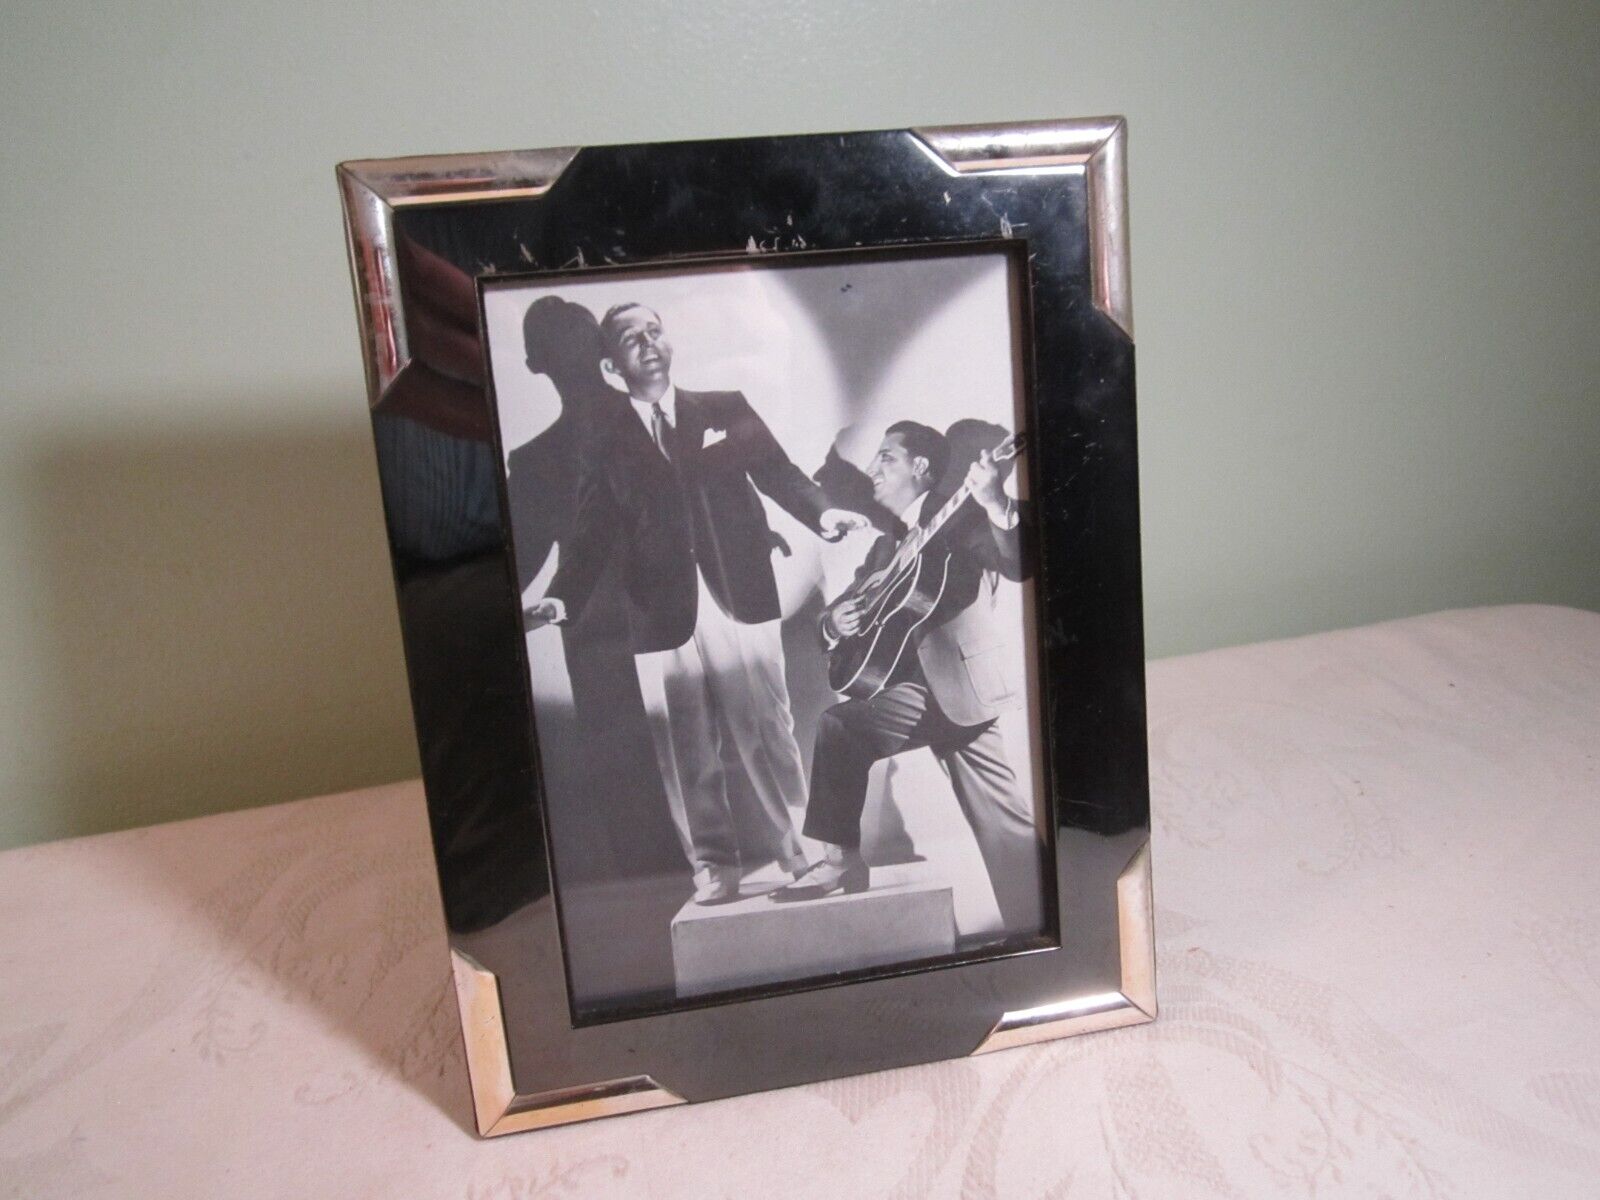 Vintage Bing Crosby Framed Black and White Record Album Photo Print